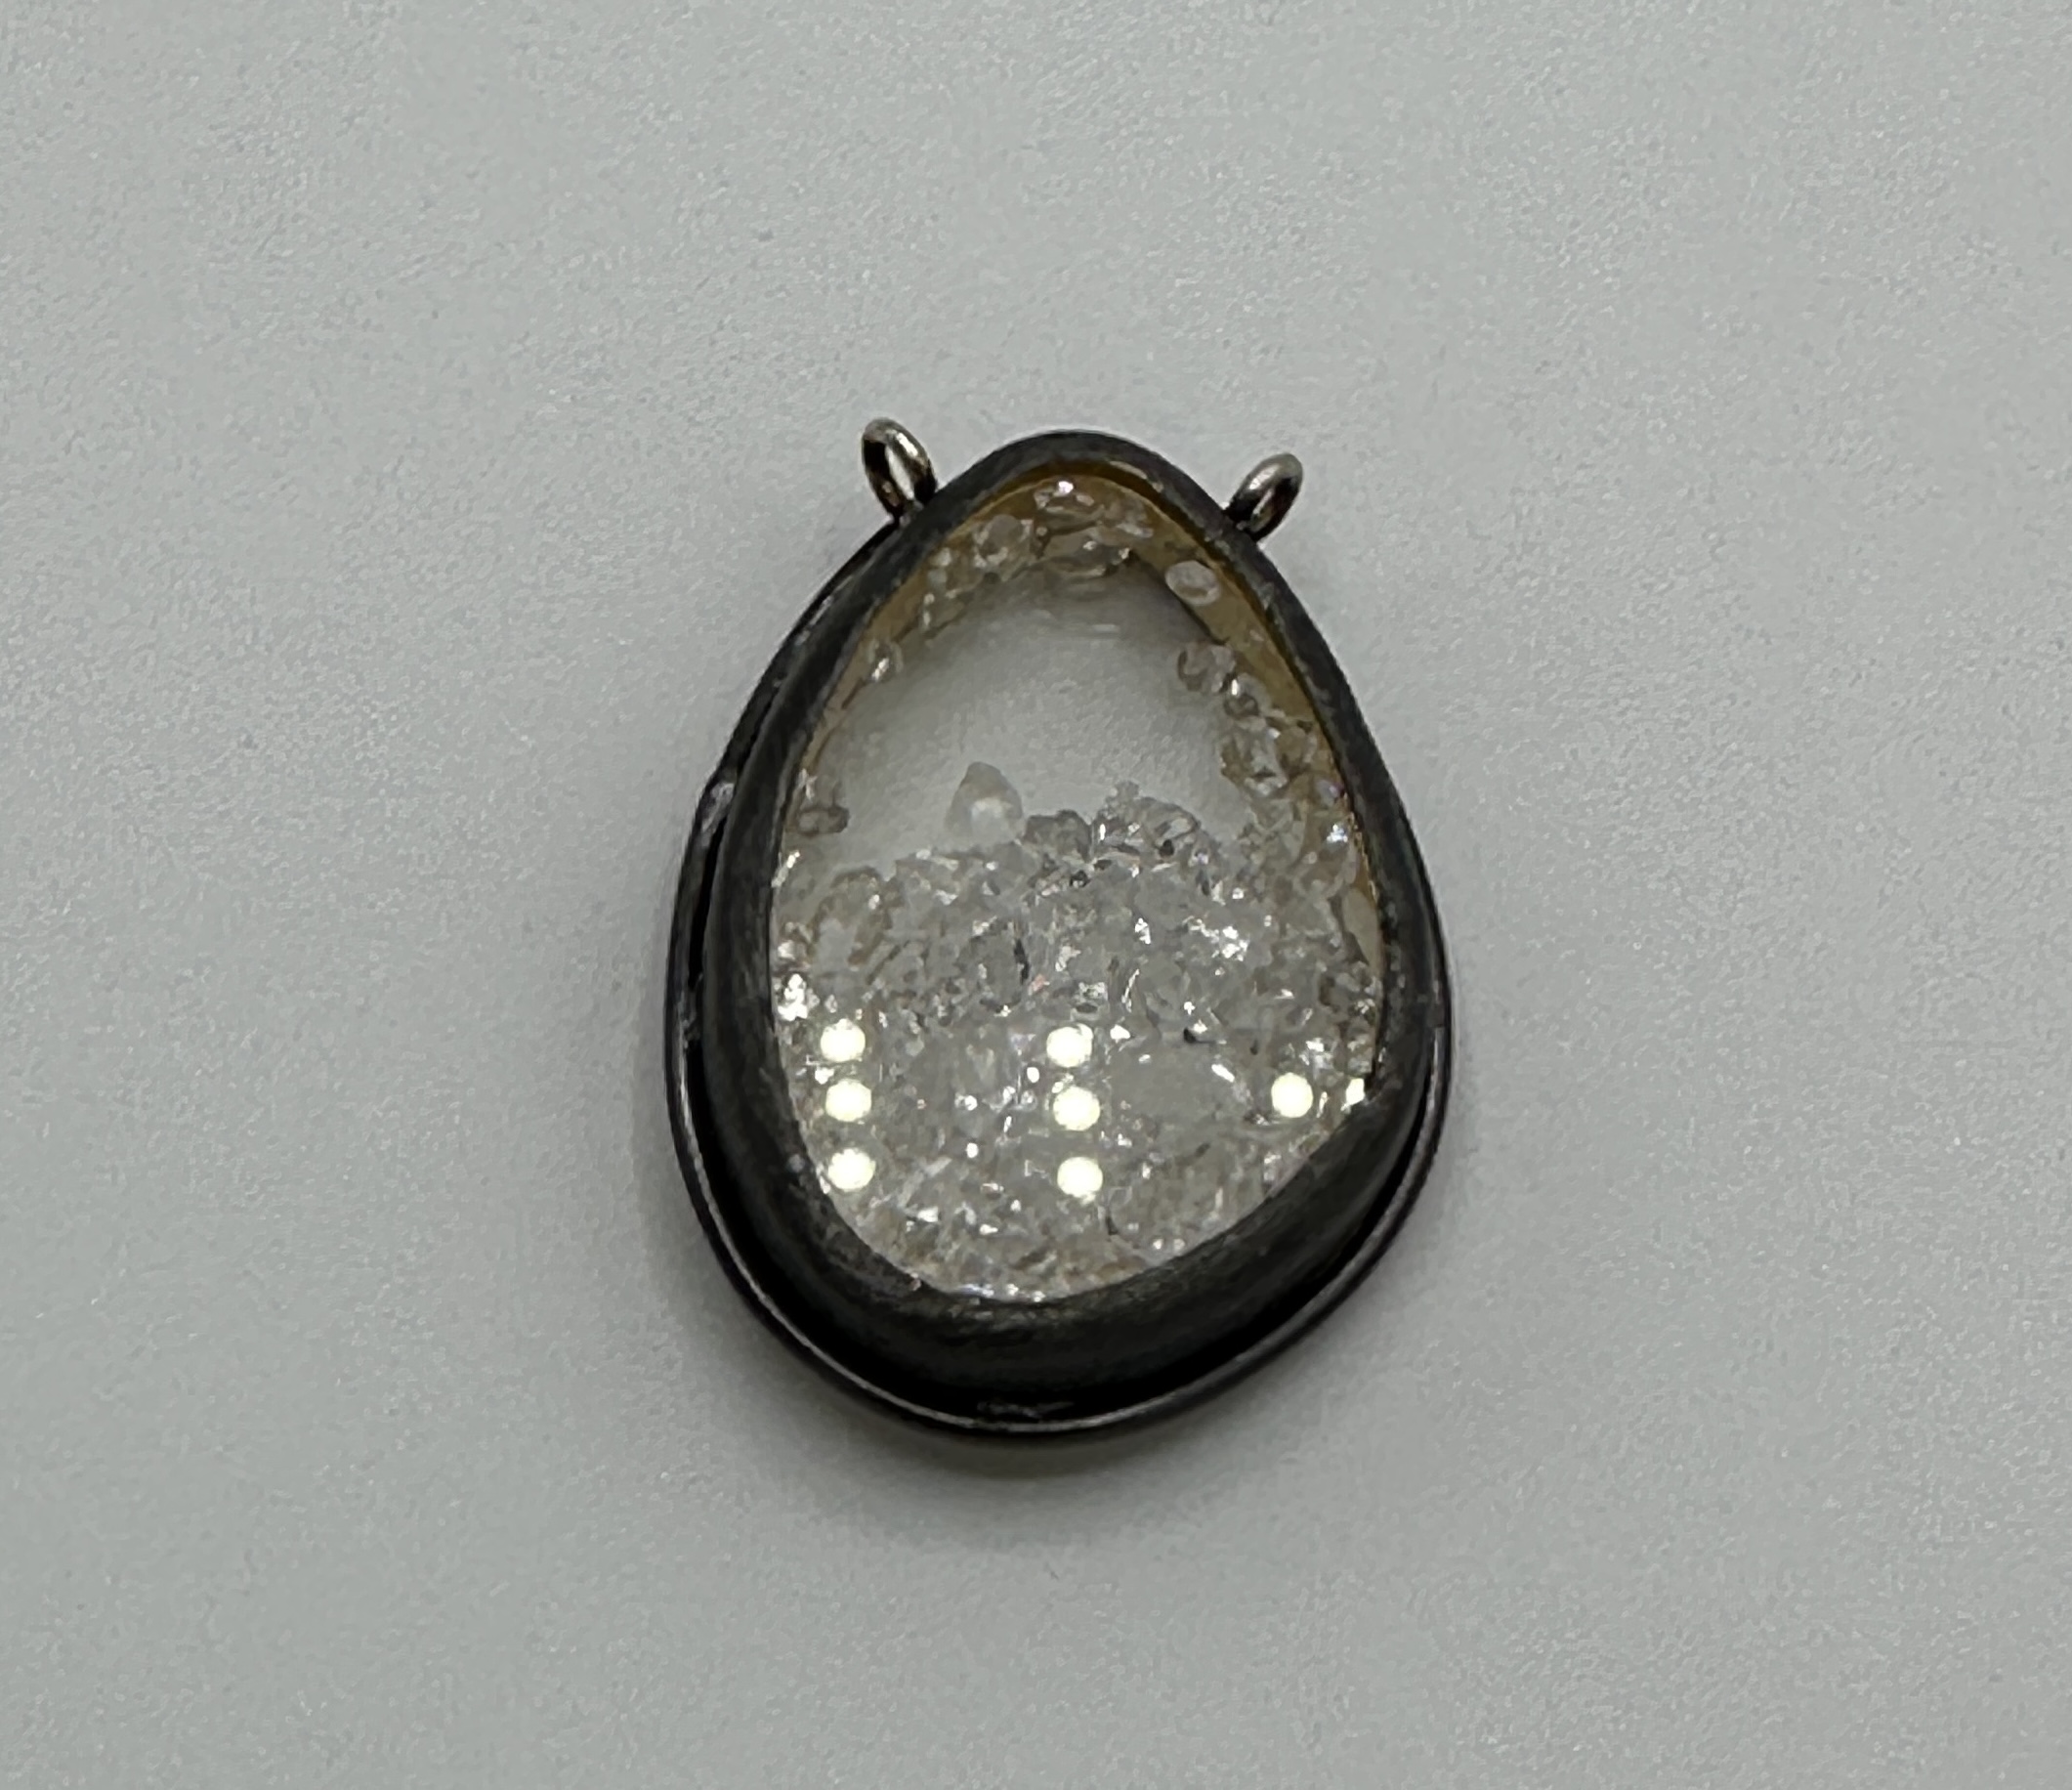 Teardrop Shaped Centerpiece, 925 Sterling, Plated in 18 Karat Gold and Oxidized. Herkimer Diamonds Inside Shaker.